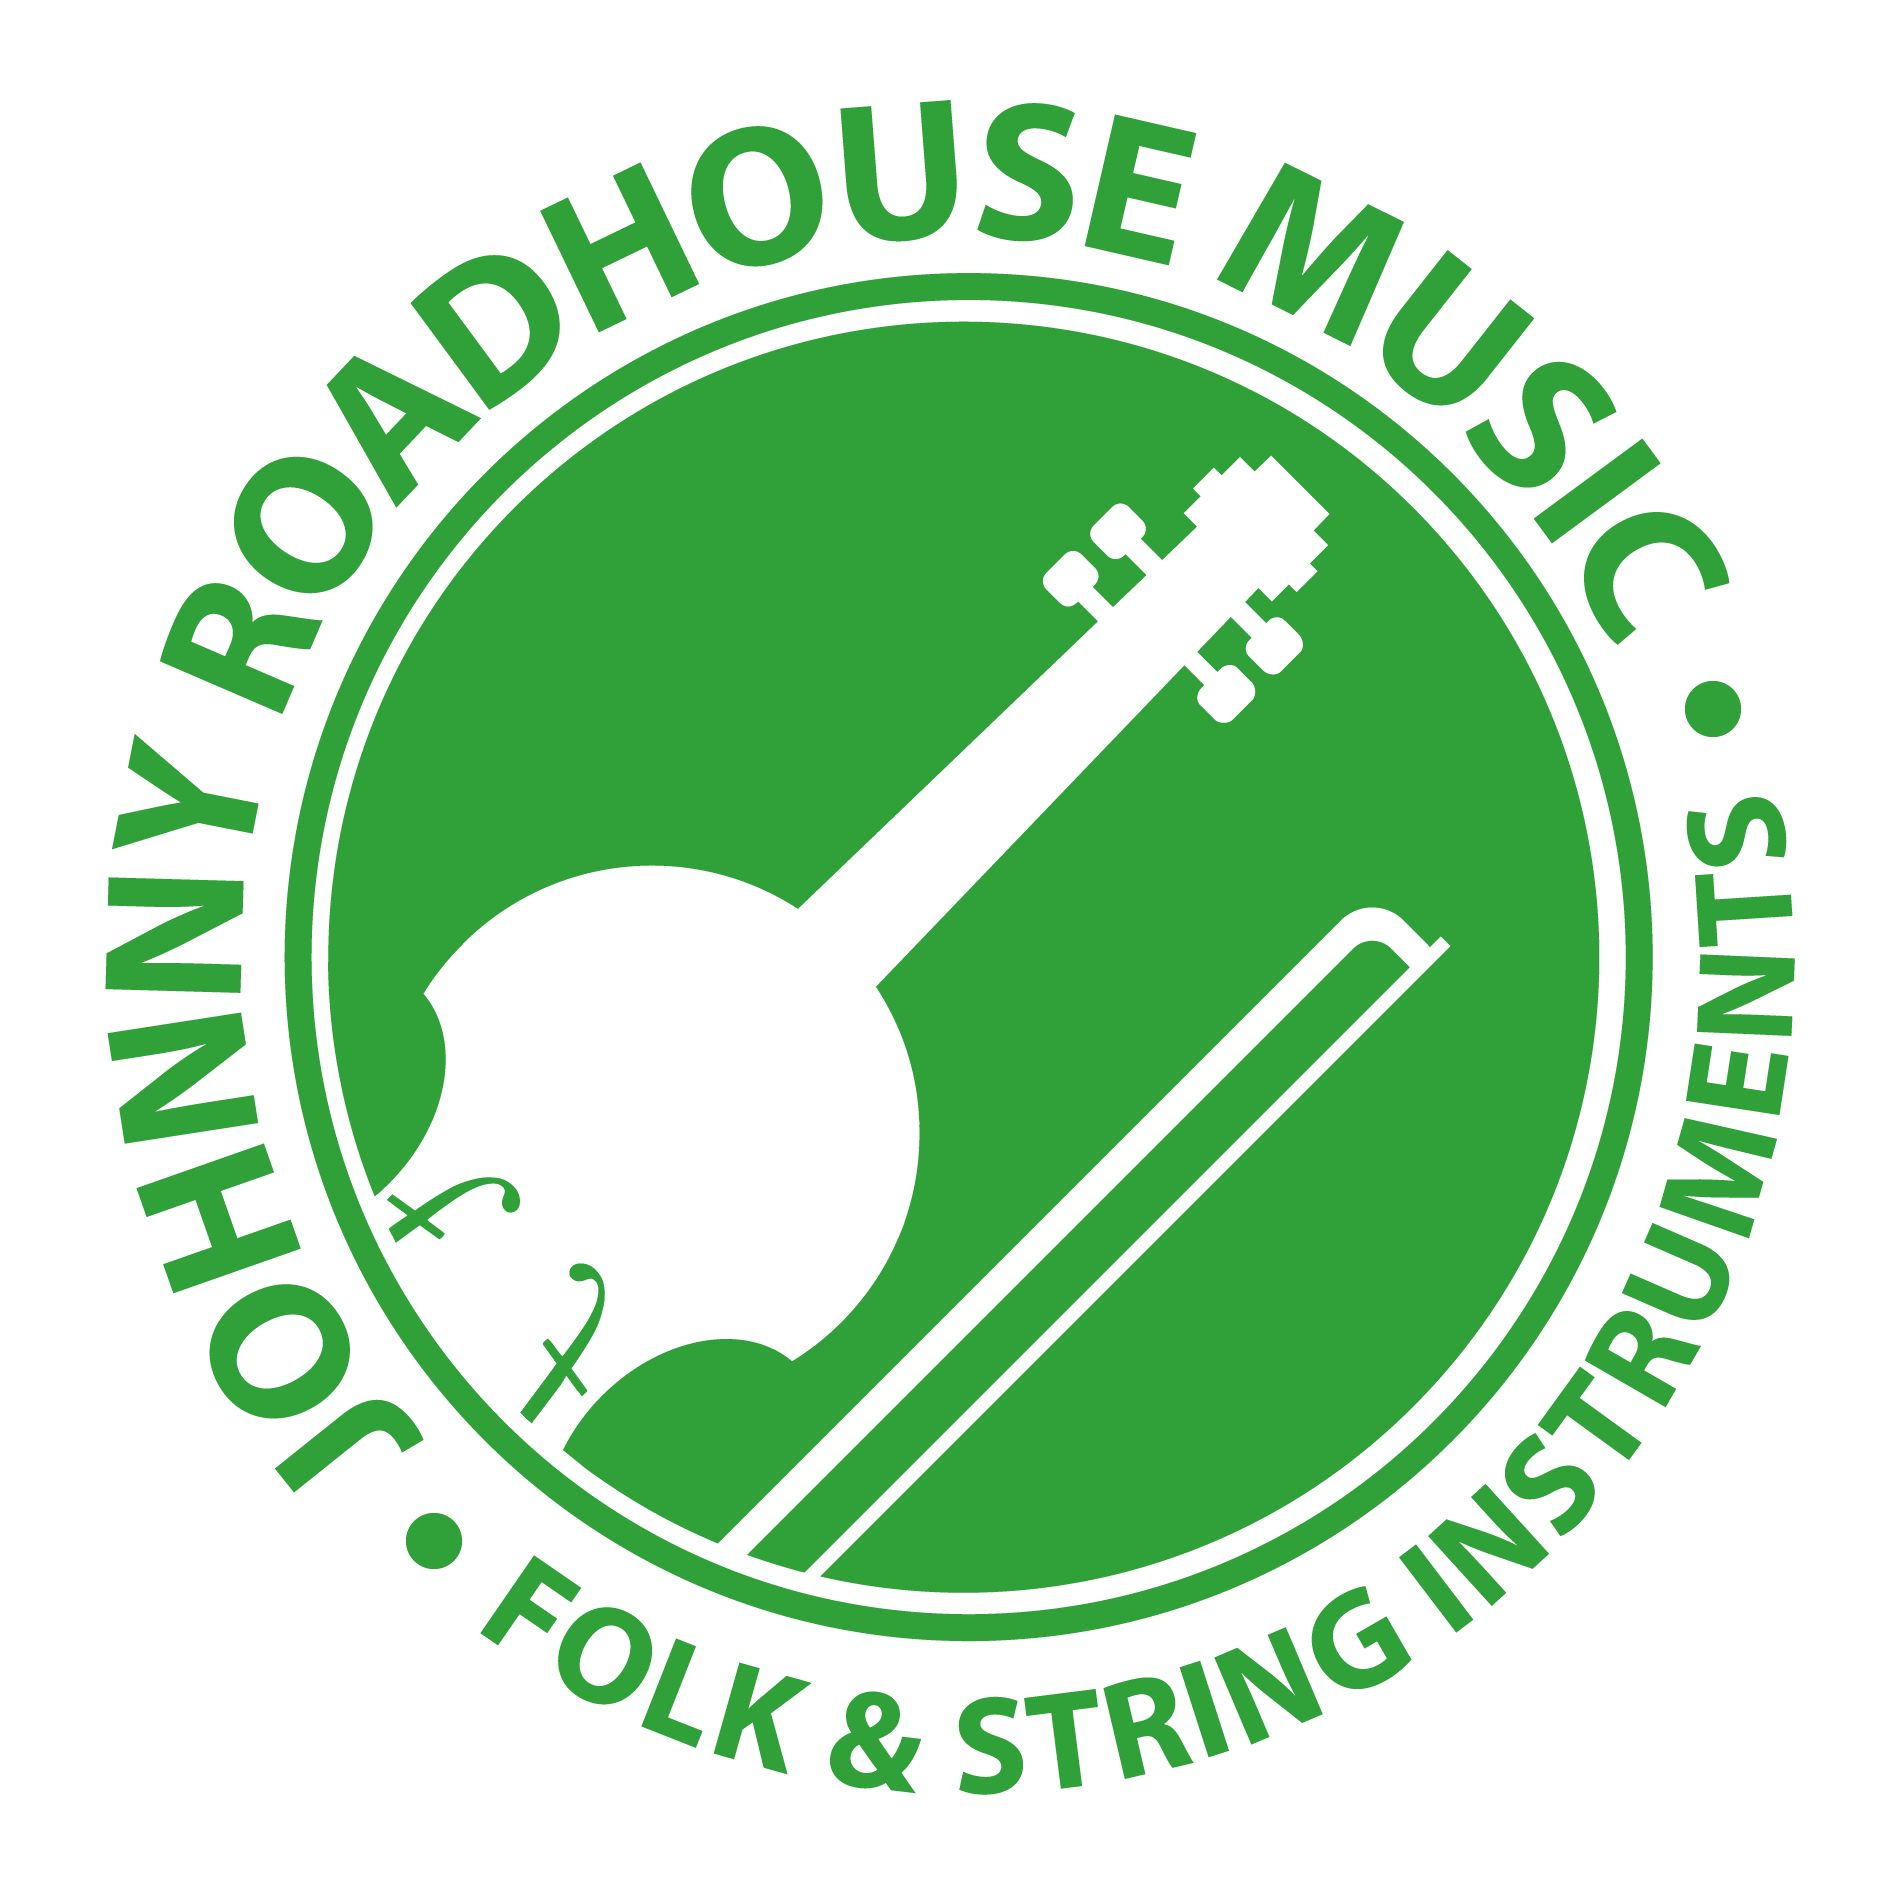 Johnny Roadhouse Music - Folk & String Department